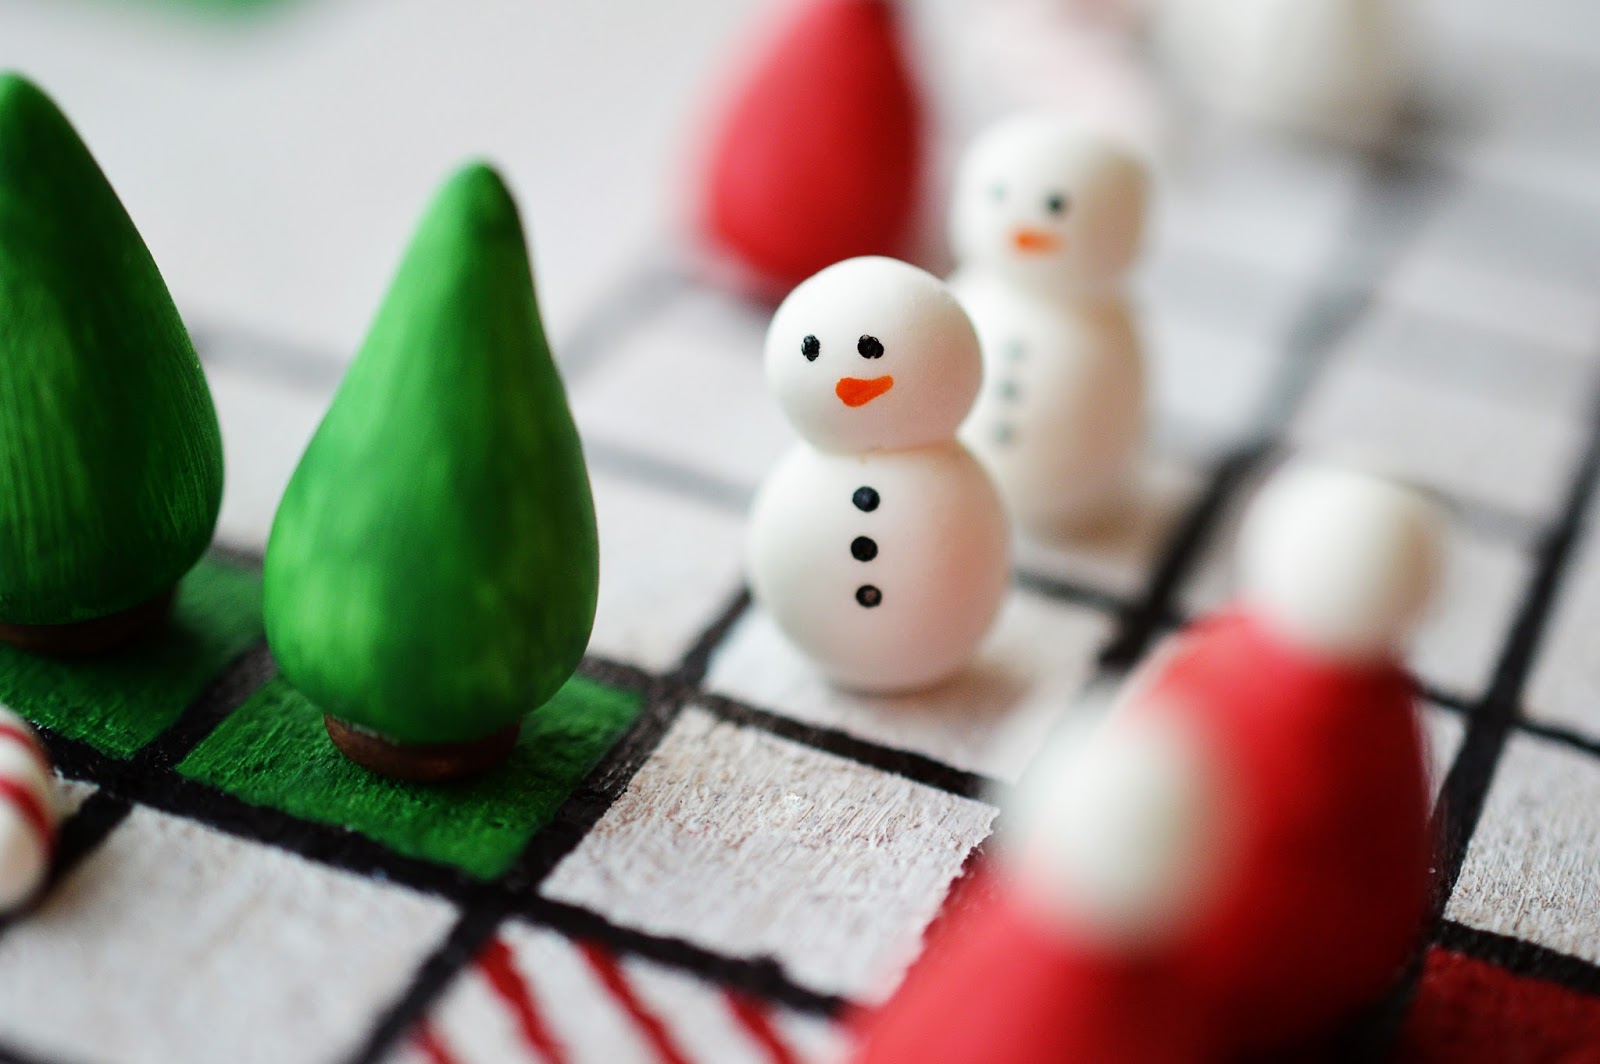 DIY Christmas Board Game | Santa ärgere dich nicht | Motte's Blog